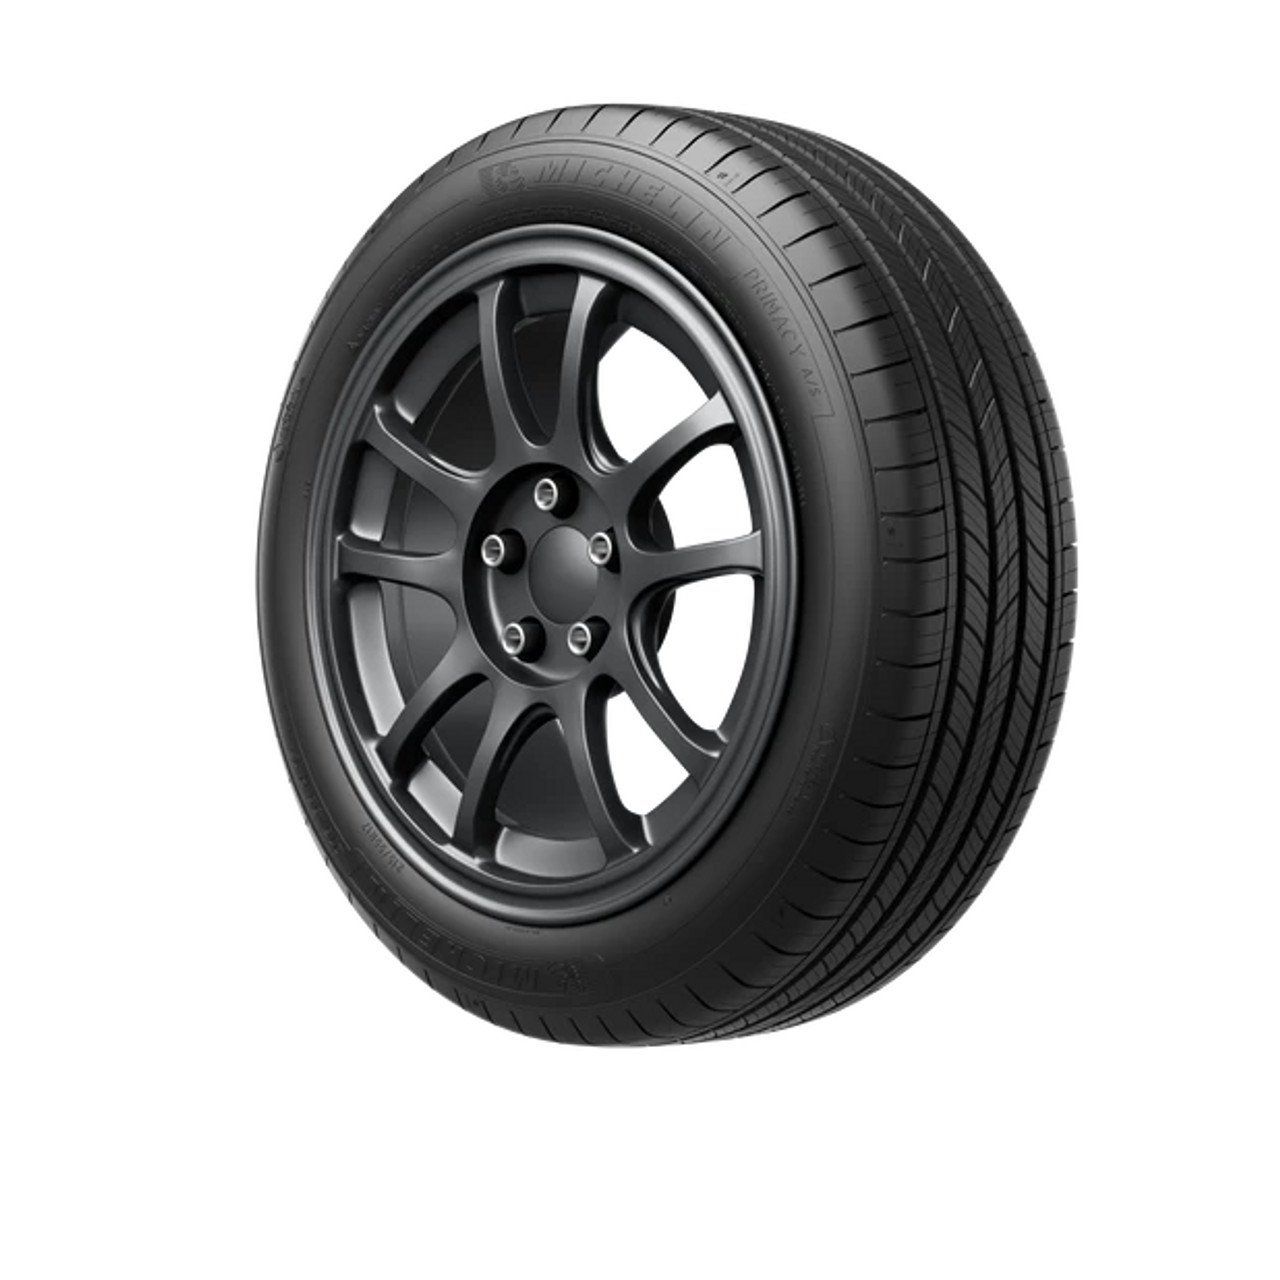 Michelin Primacy Tour A/S All-Season 225/55R18 98V Tire